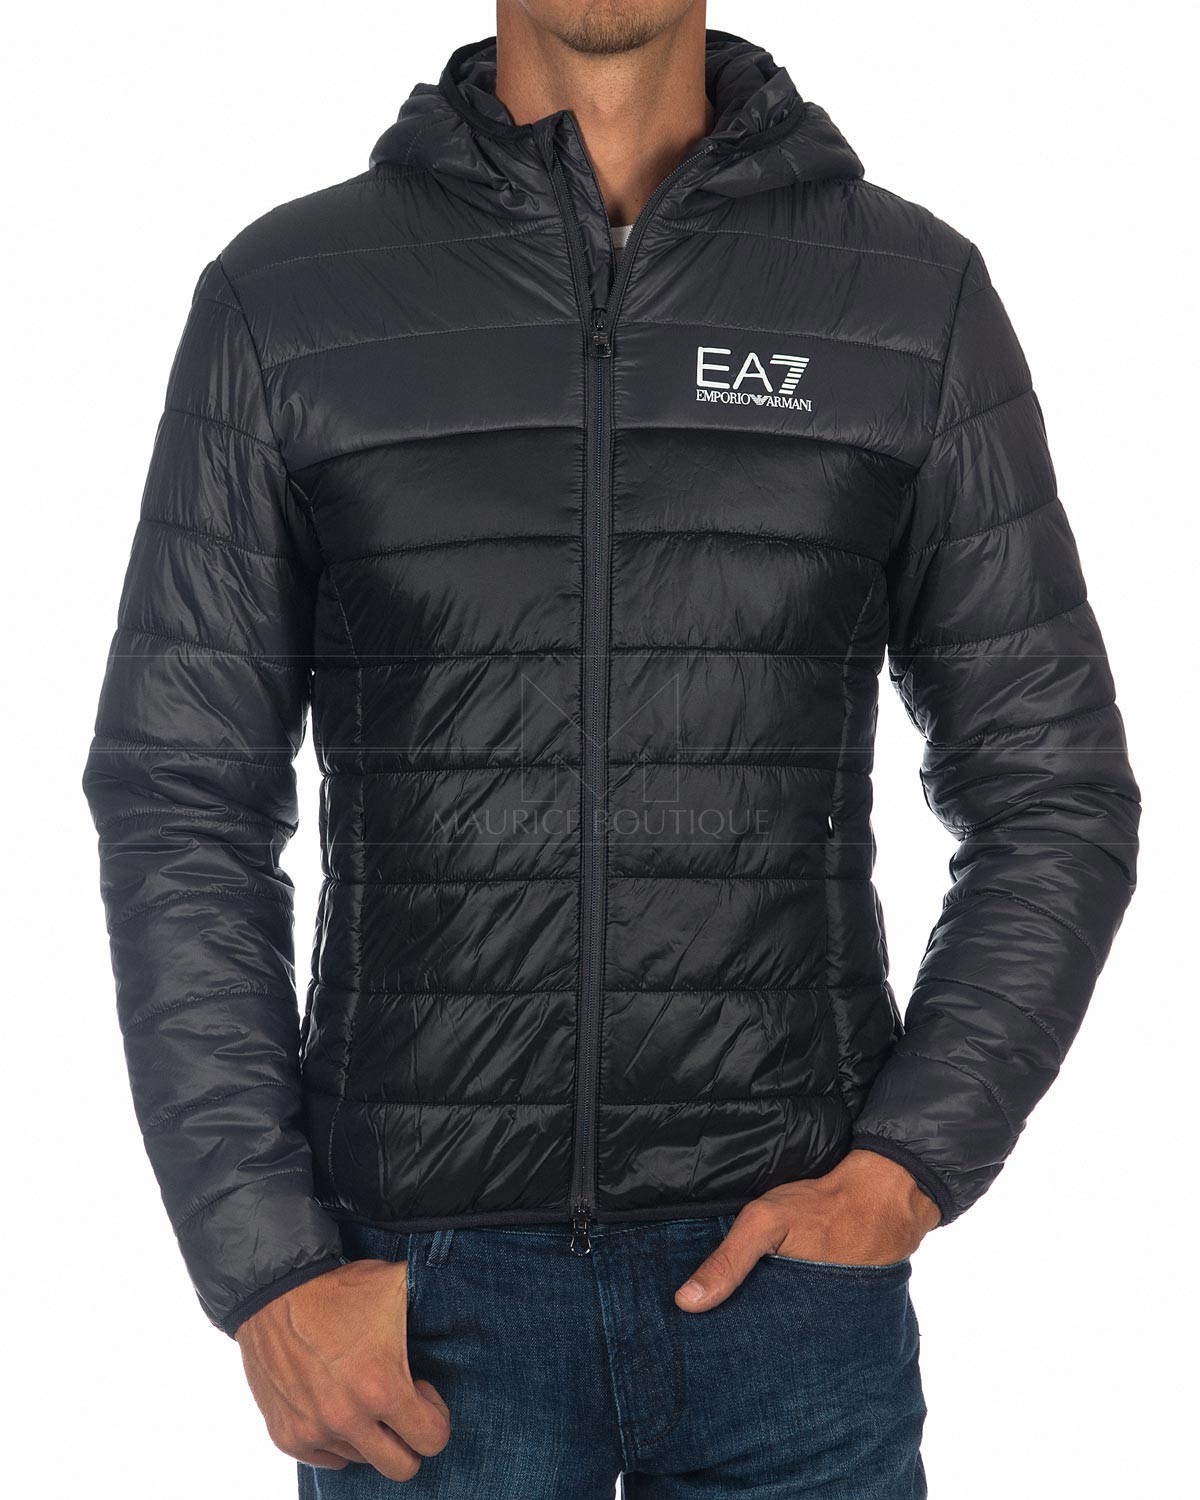 EA7 EMPORIO ARMANI Jackets – Sporty-elegant fashion for the whole year